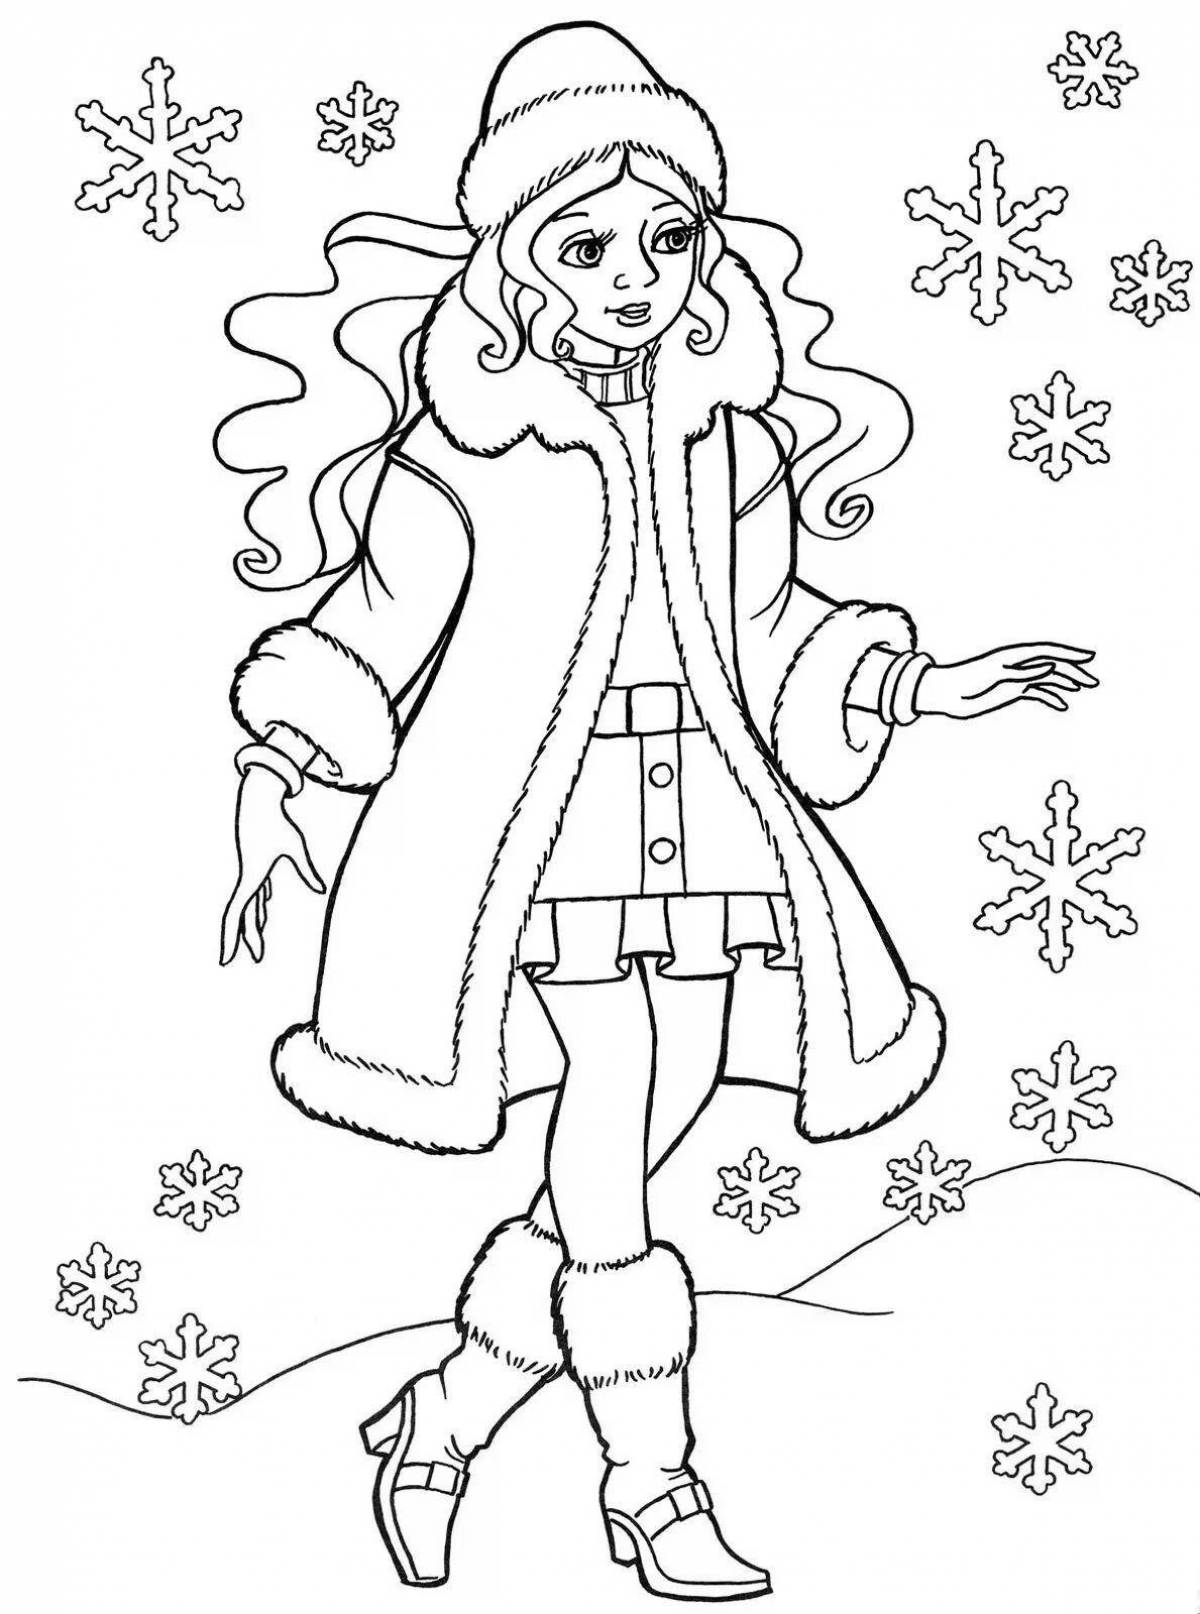 Shine coloring girl in a fur coat